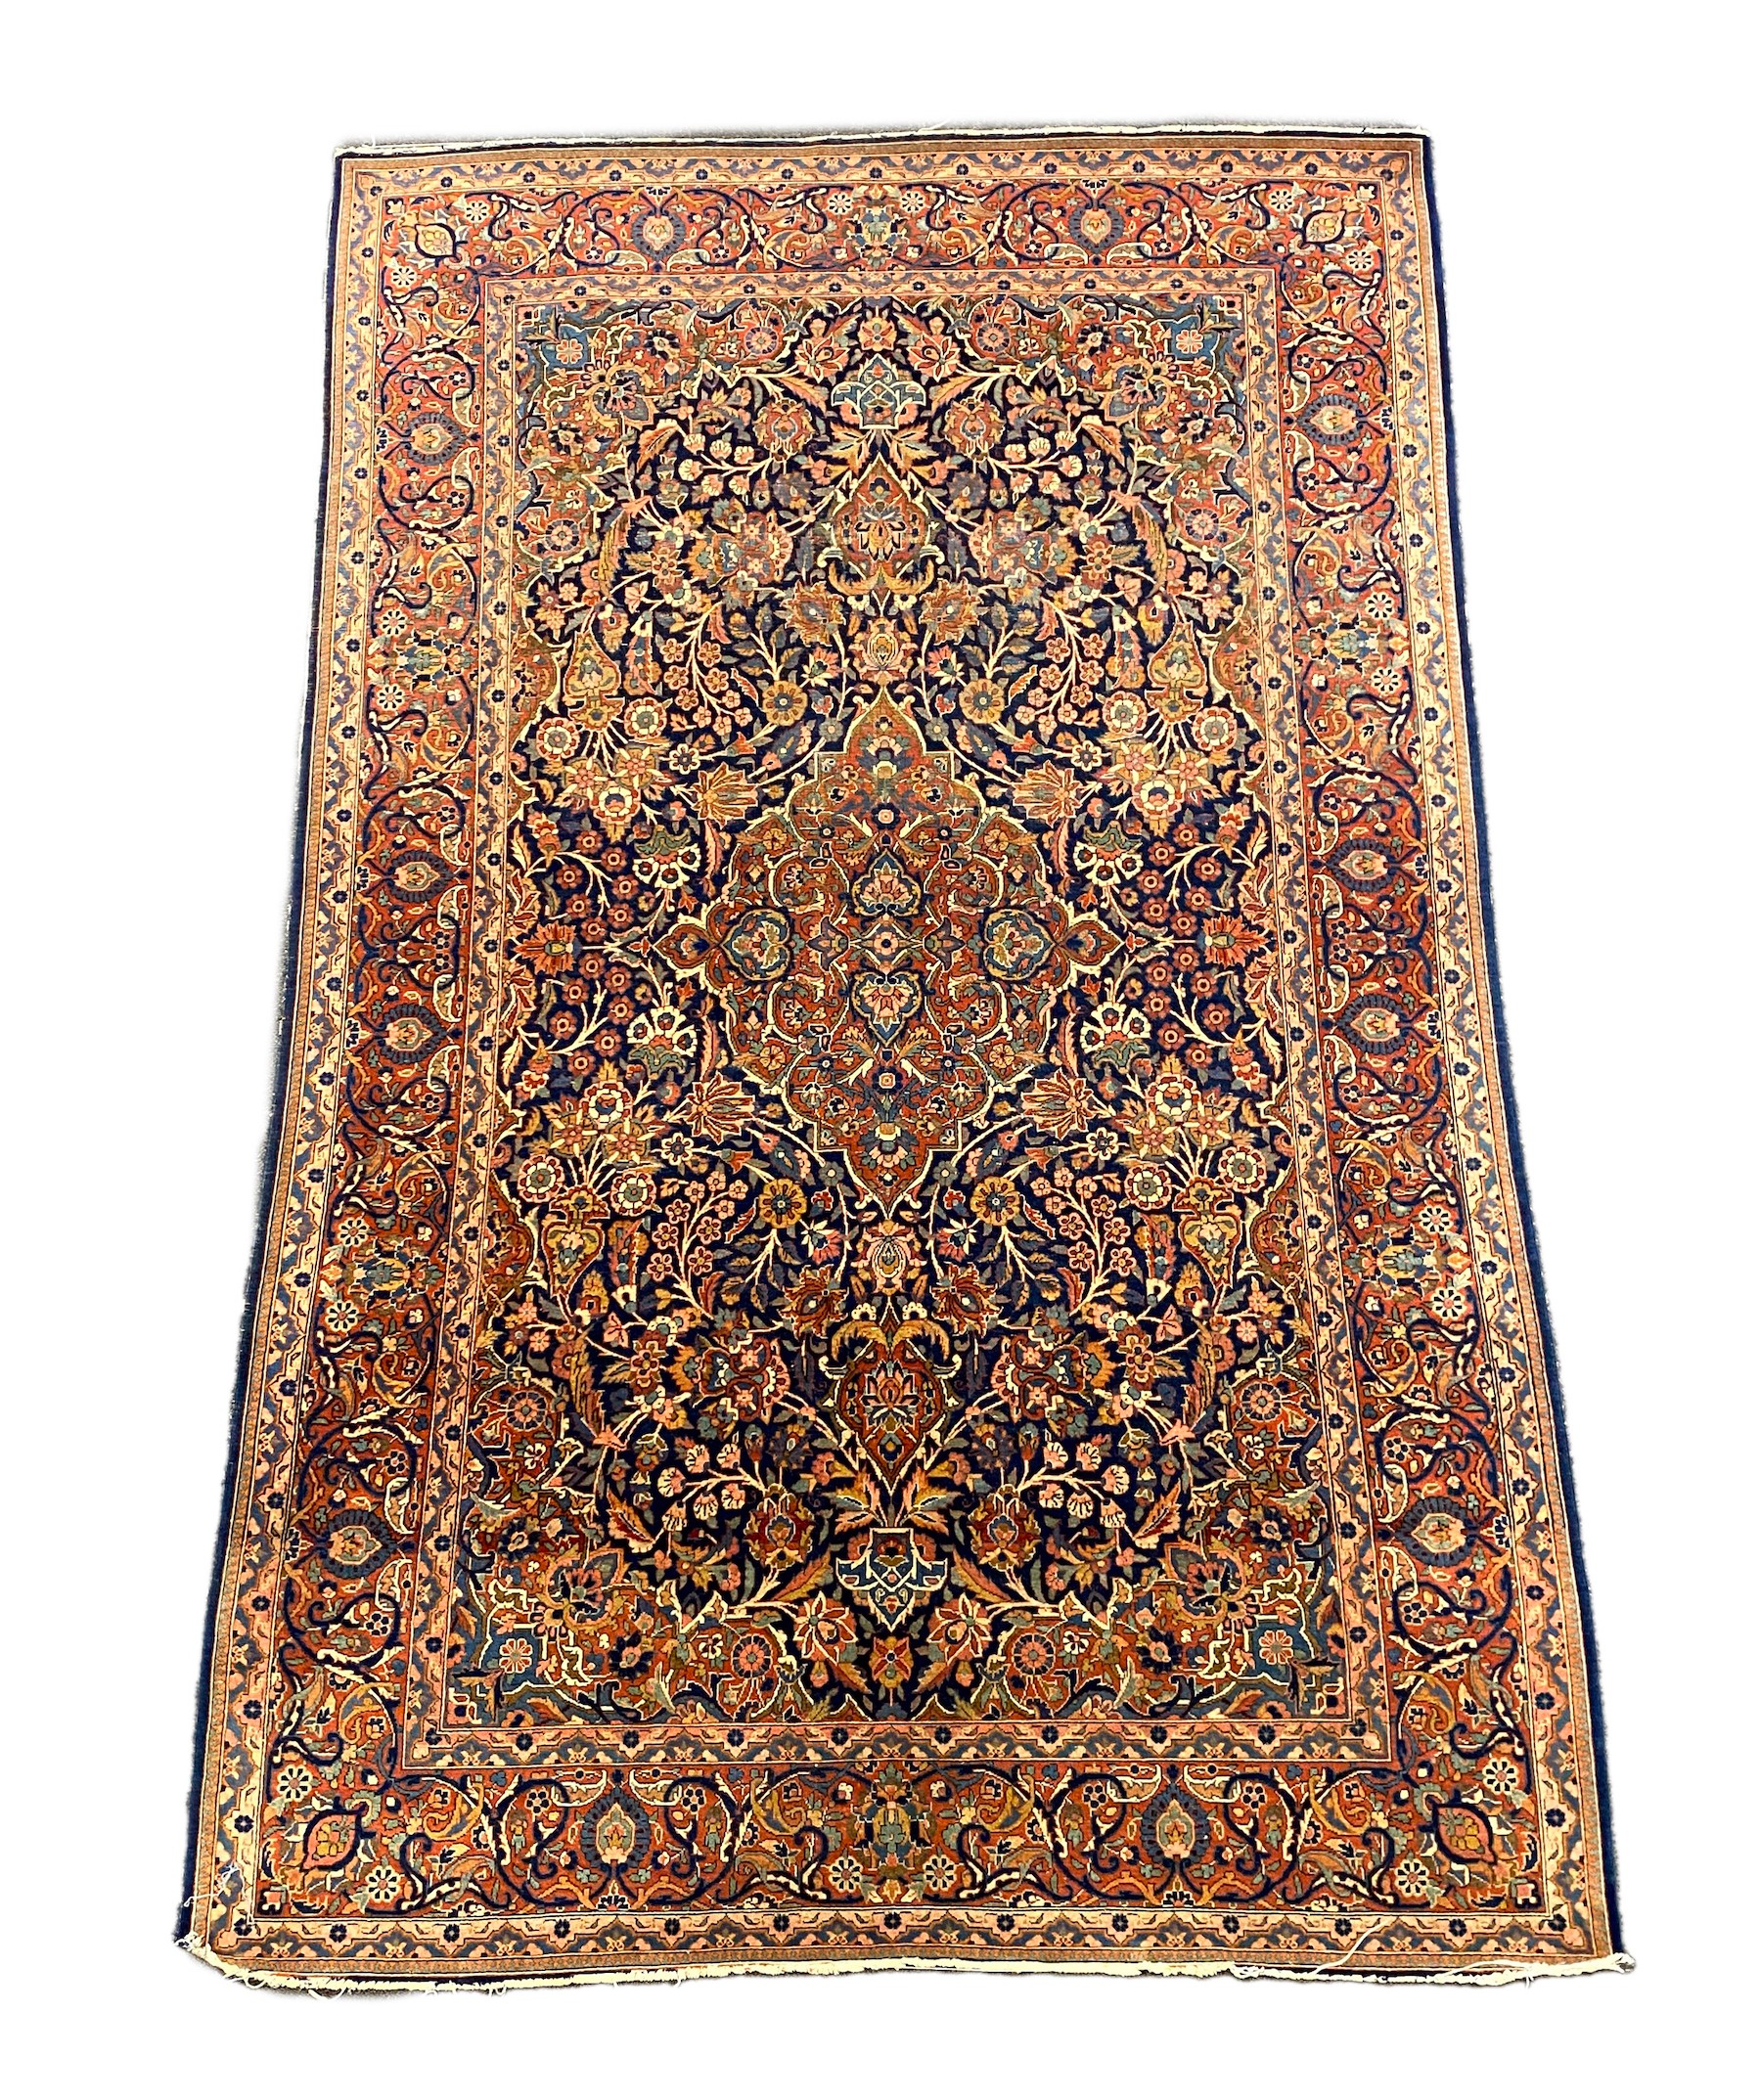 An early 20th century Kashan blue ground rug, 208cm x 134cm